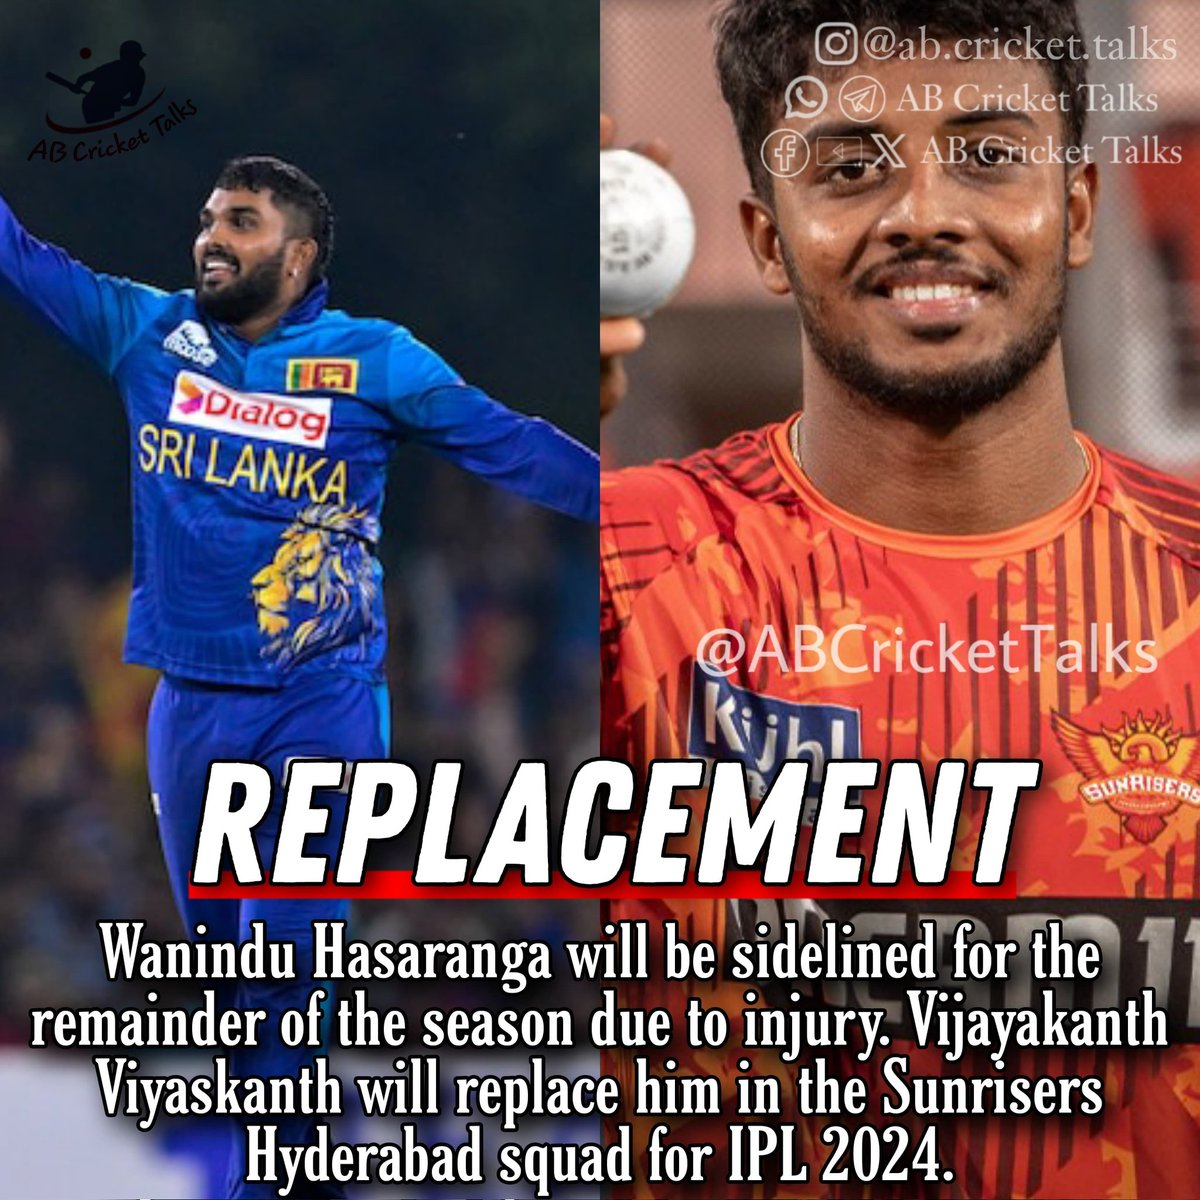 #WaninduHasaranga will replaced by #VijayakanthViyaskanth in the Sunrisers Hyderabad squad for IPL 2024
#ABCricketTalks #CricketTalksWithArpit 

#srhowner #srhfamily #srhfam #srhvscsk #rohit #srh2020 #kavyamaran #kavyamaranofficial #srh #Kavya